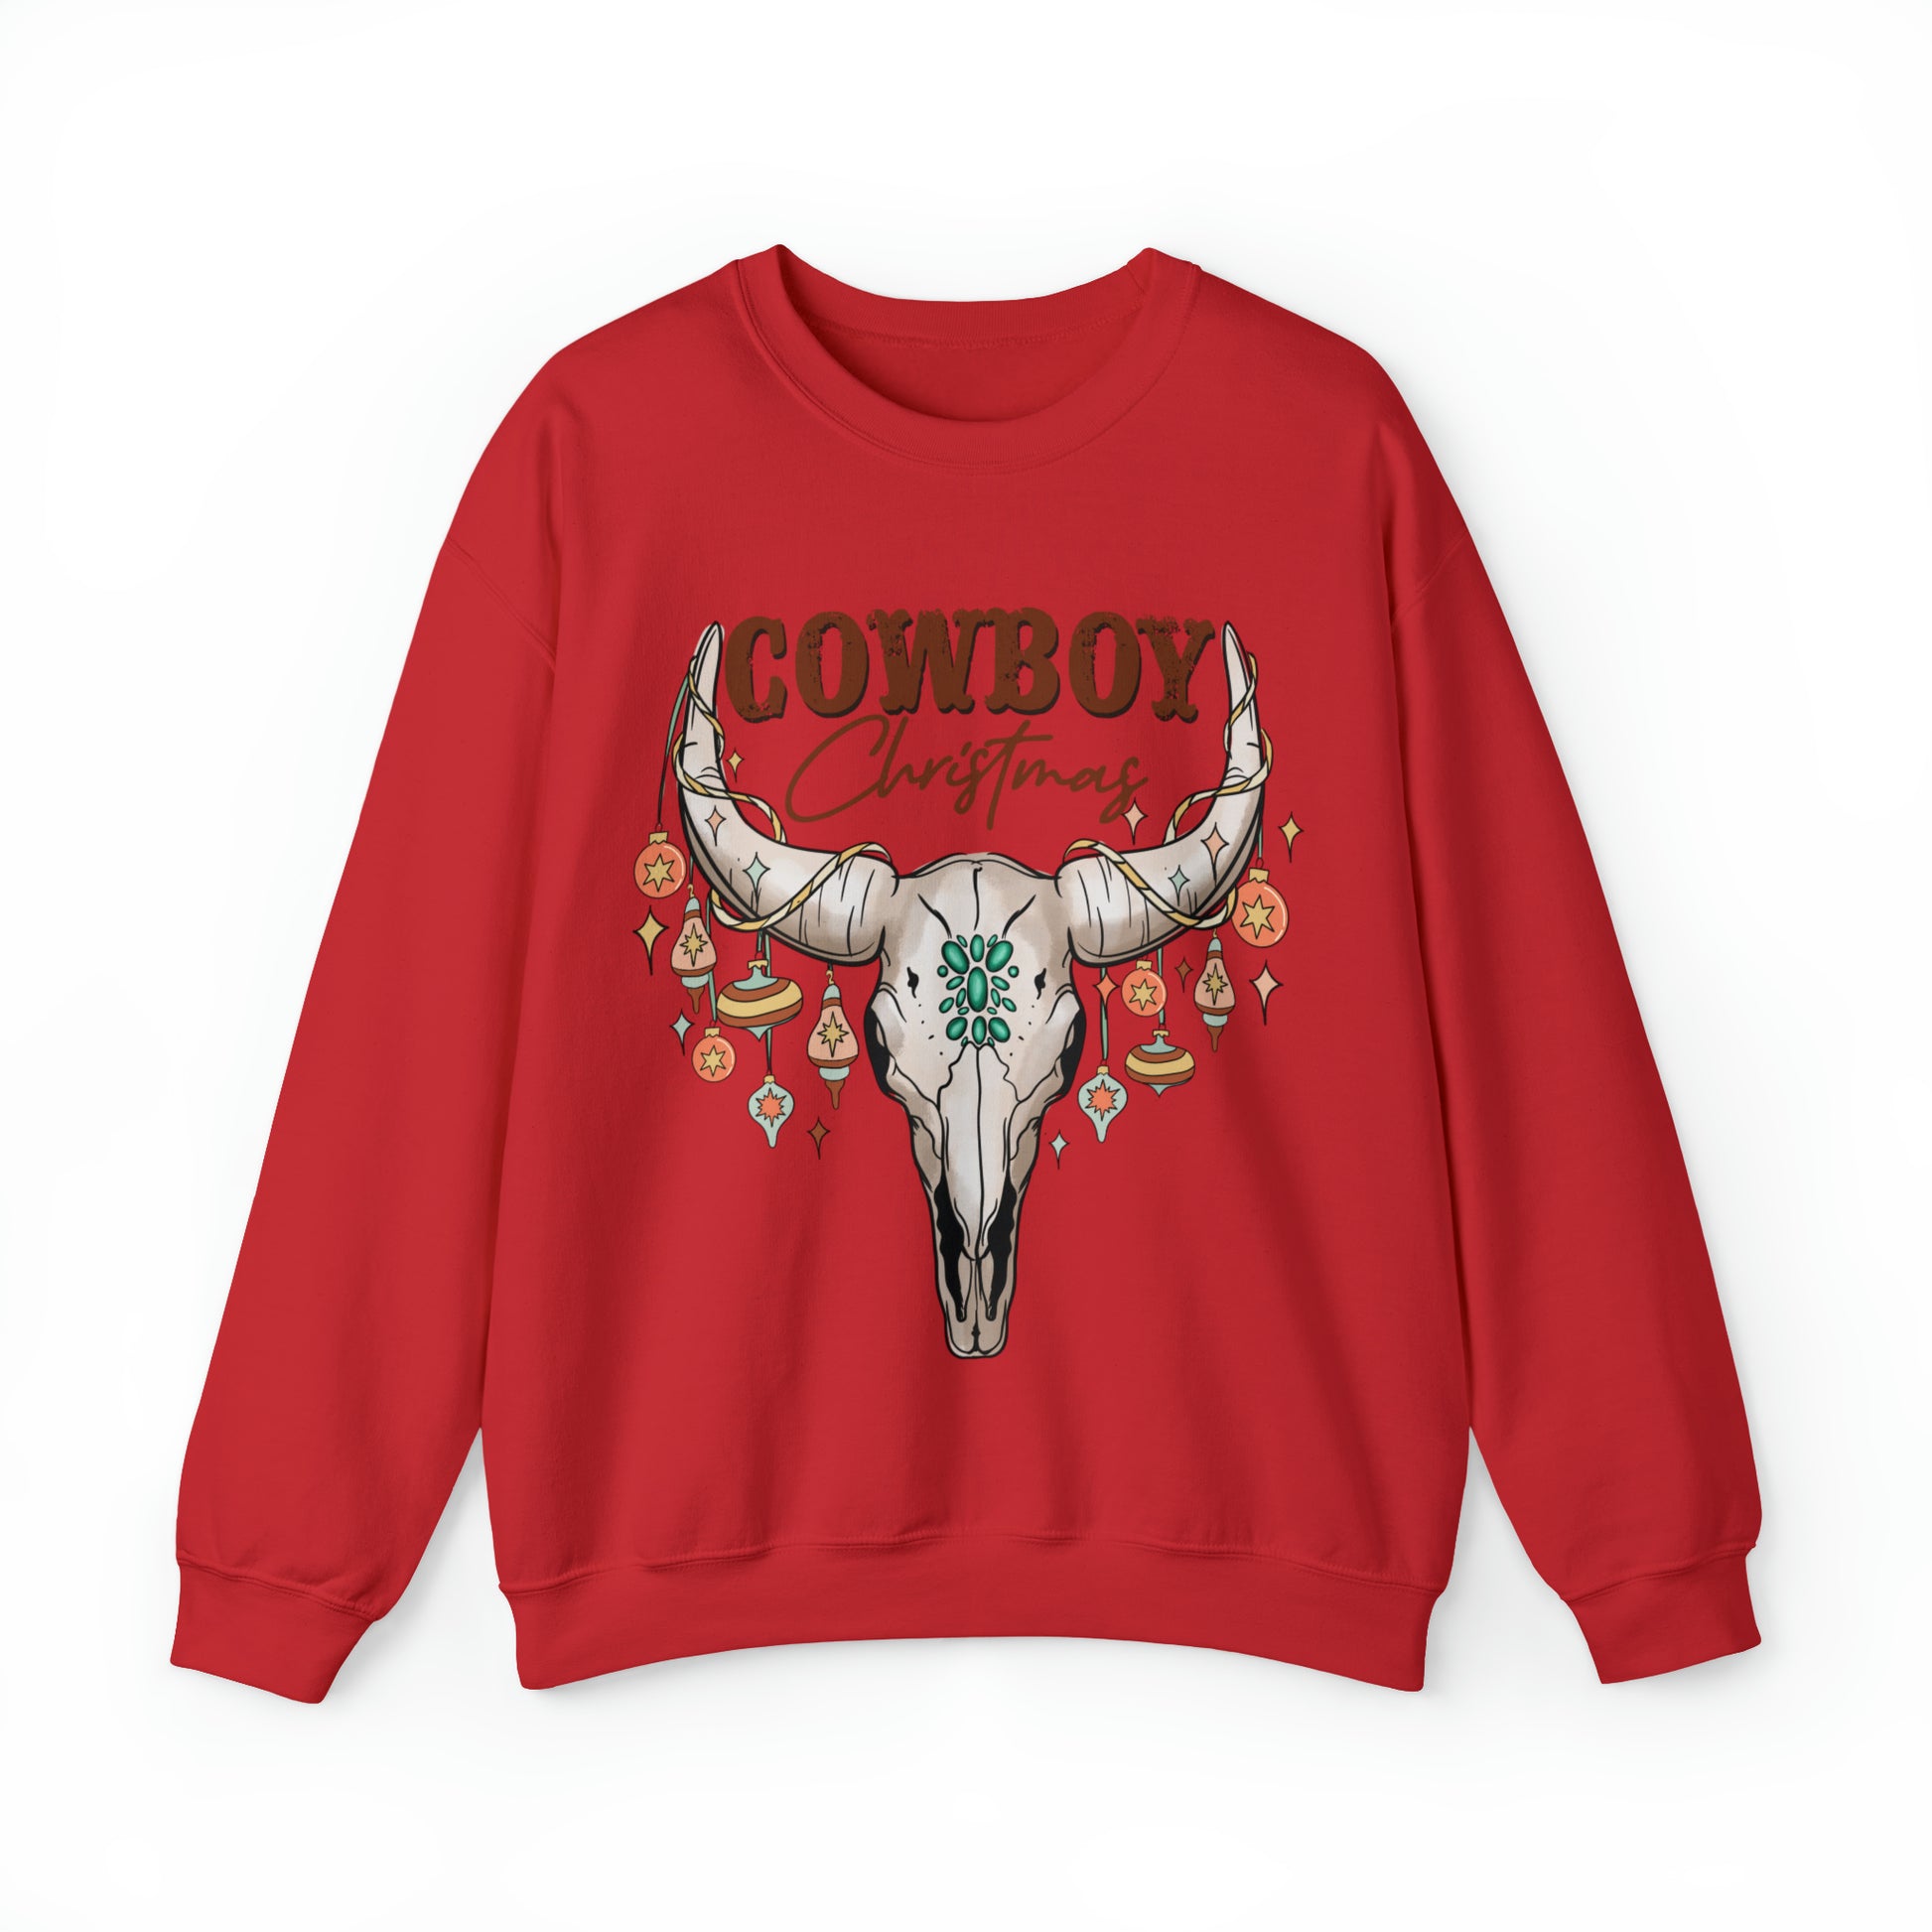 Cowboy Christmas Western Themed Christmas Sweater